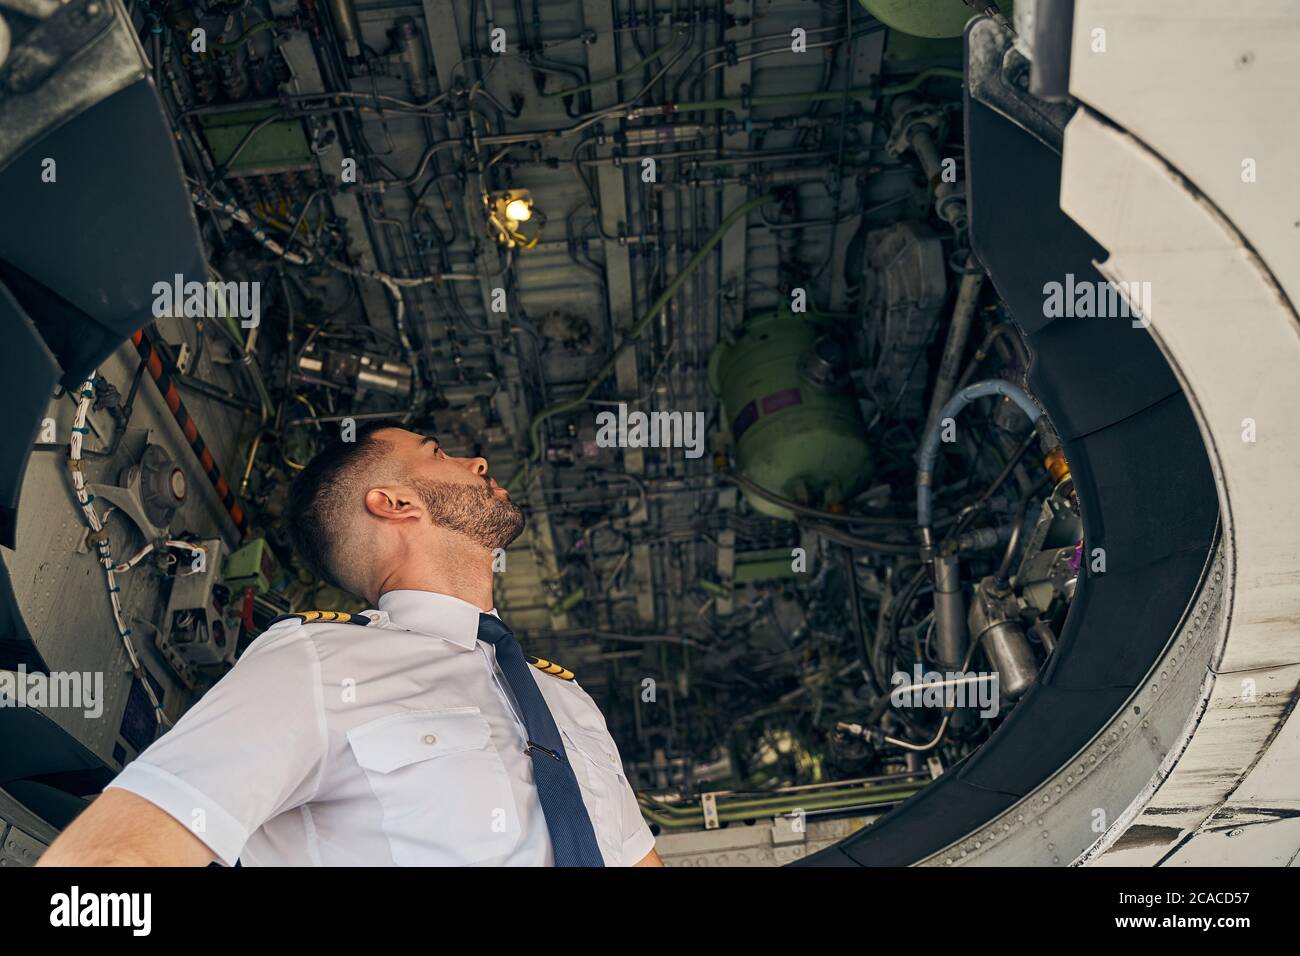 Caucasian airman in uniform inspecting an aircraft Stock Photo